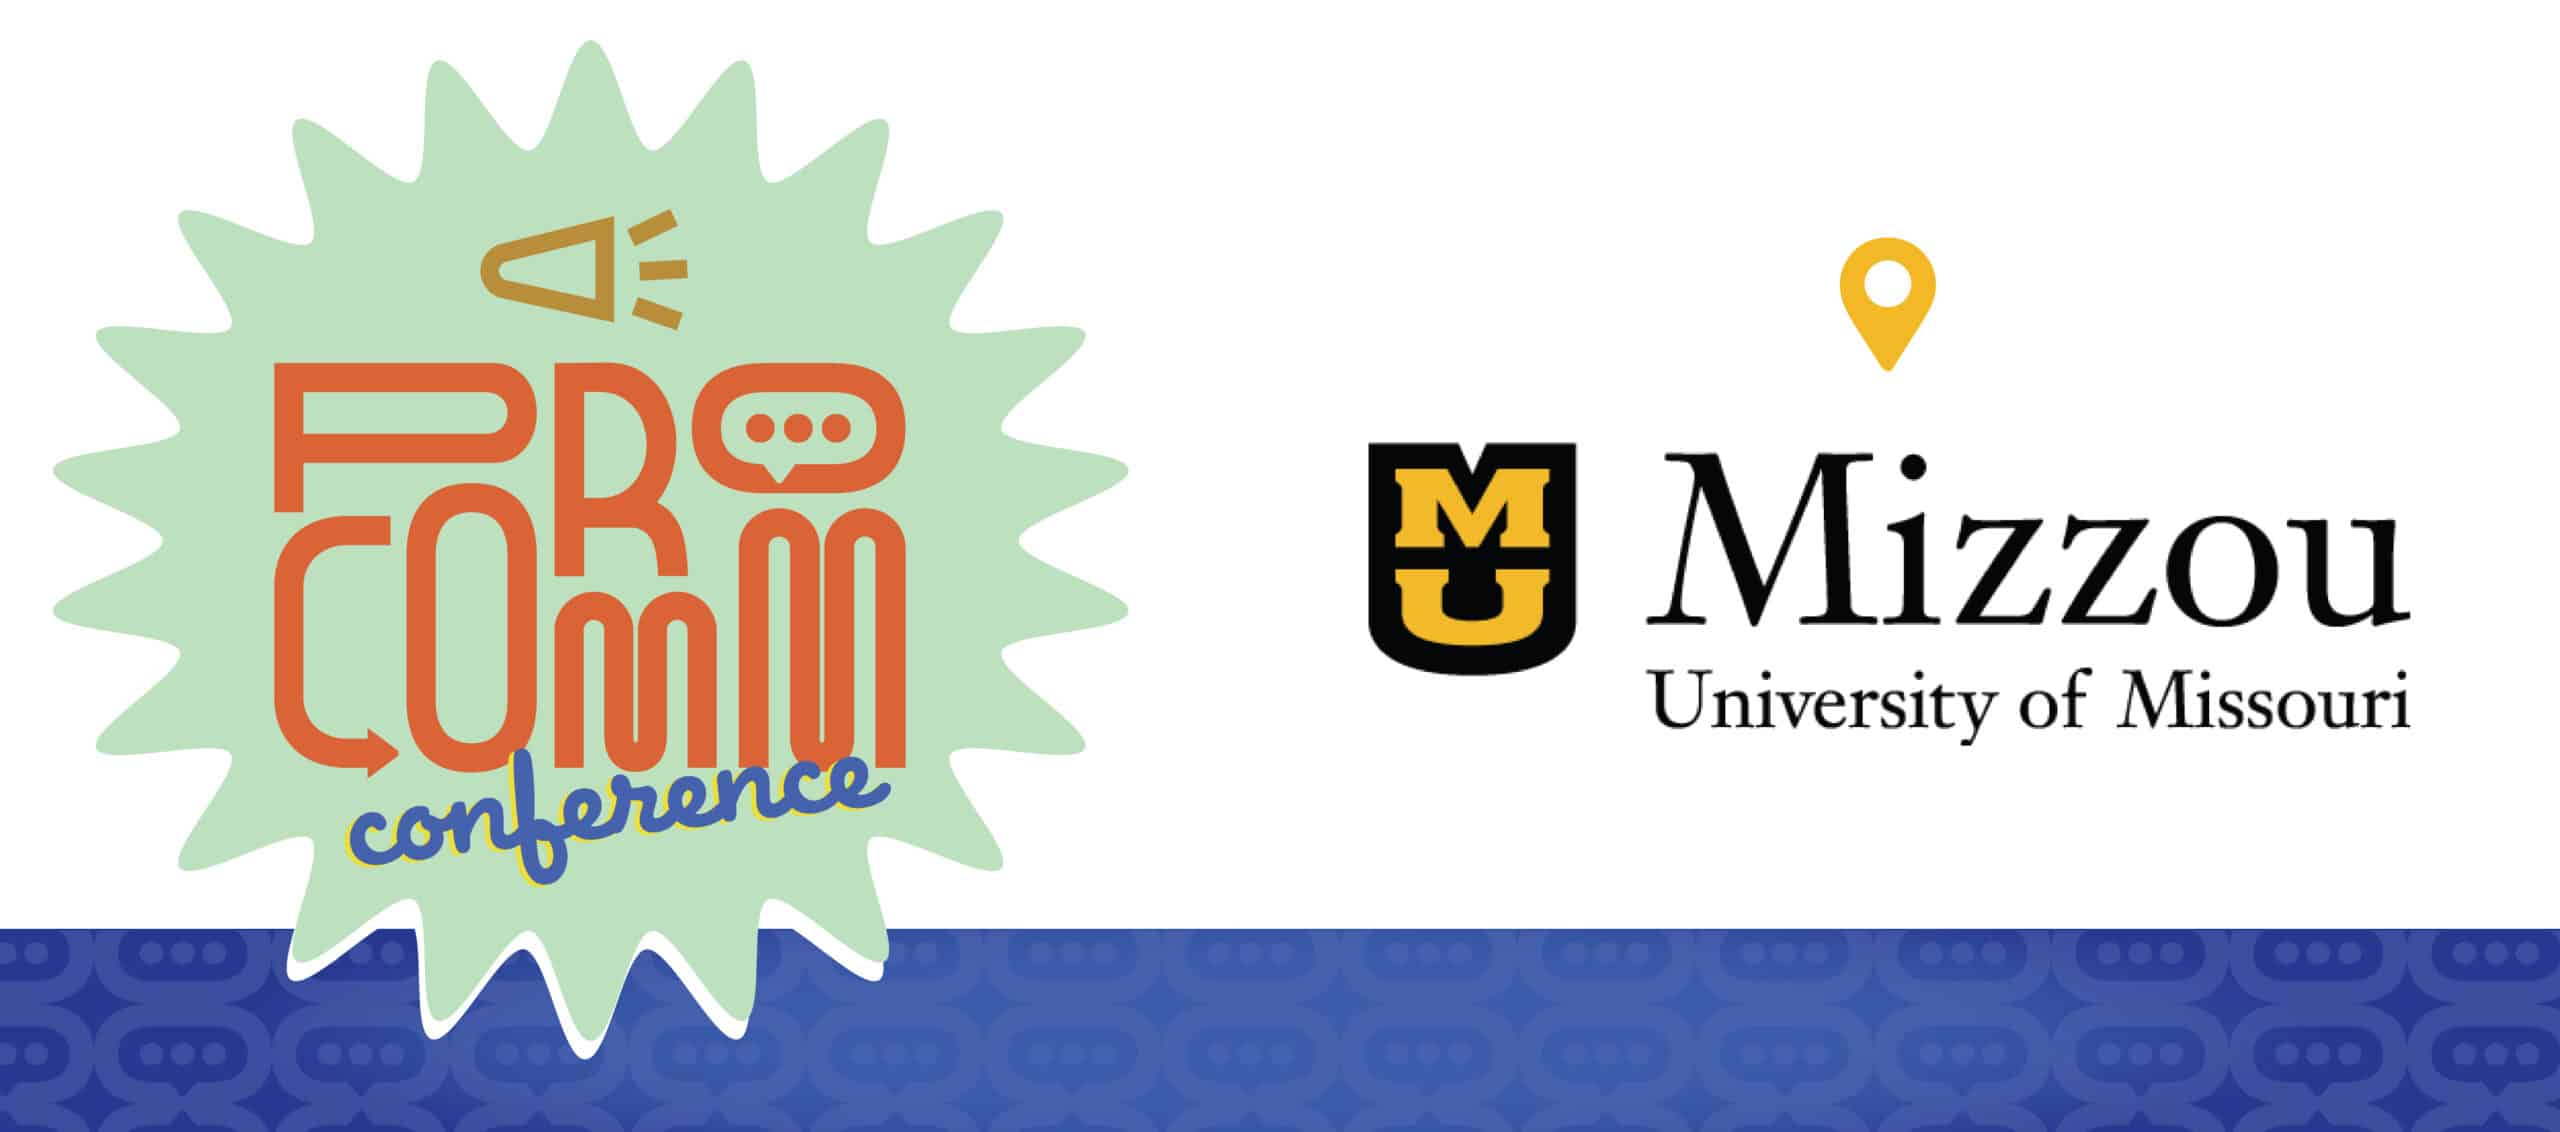 Pro Communicators Conference logo adjacent to the University of Missouri logo